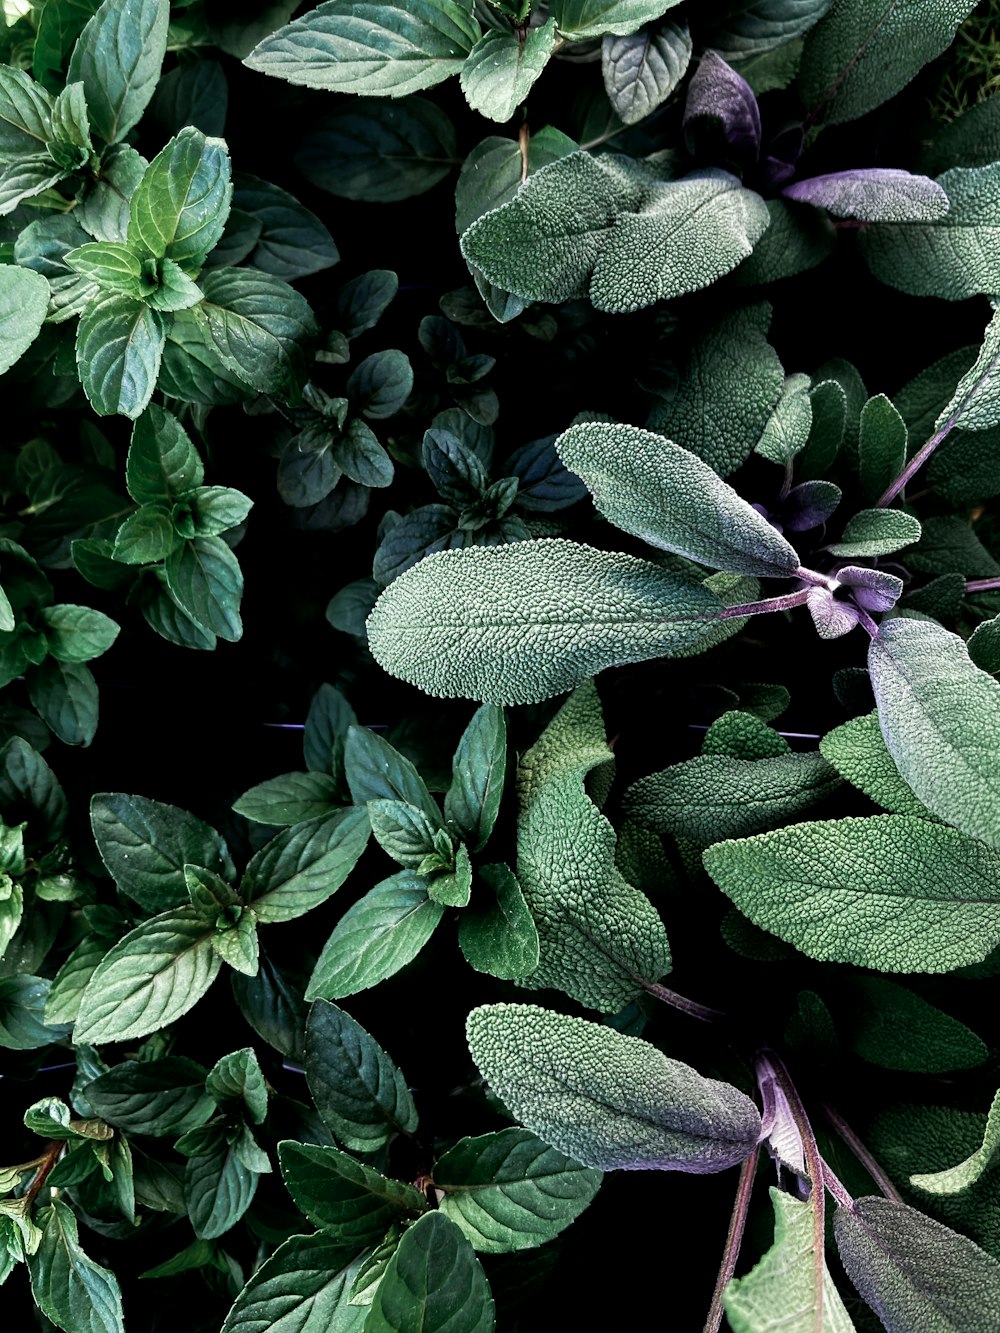 pianta di foglie verdi e viola